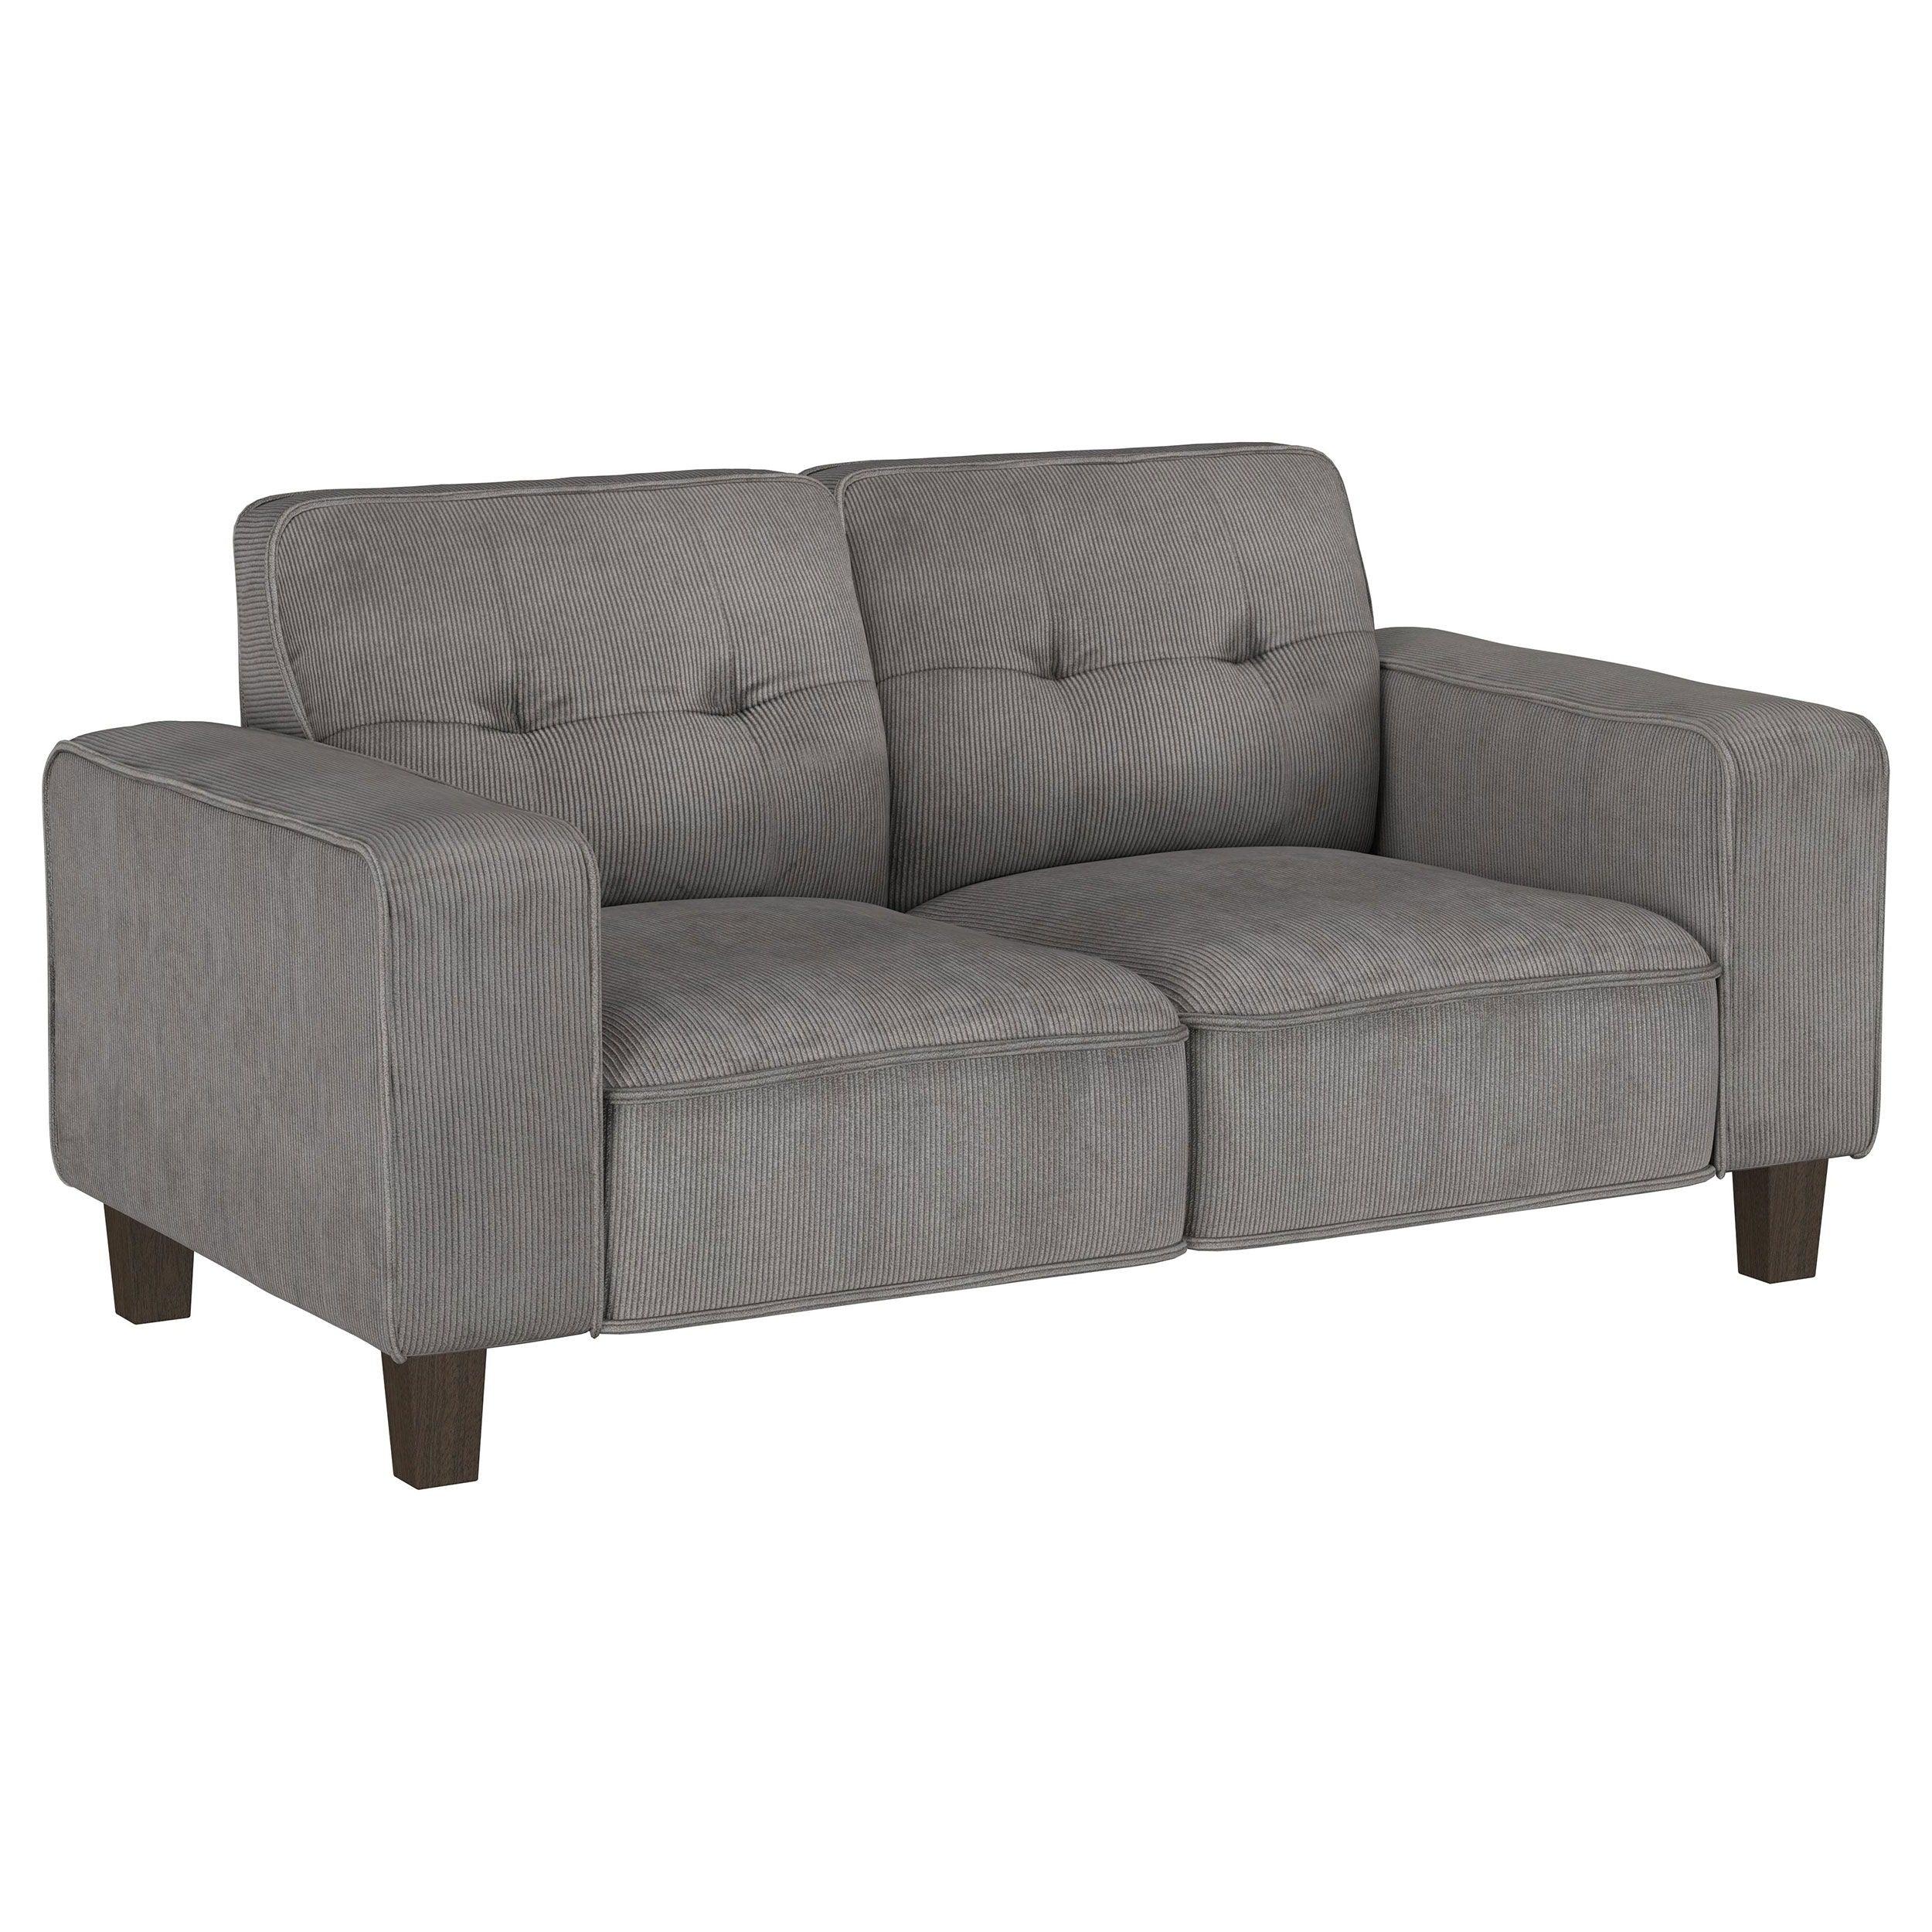 Coaster Fine Furniture - Deerhurst - Upholstered Tufted Track Arm Loveseat - Charcoal - 5th Avenue Furniture